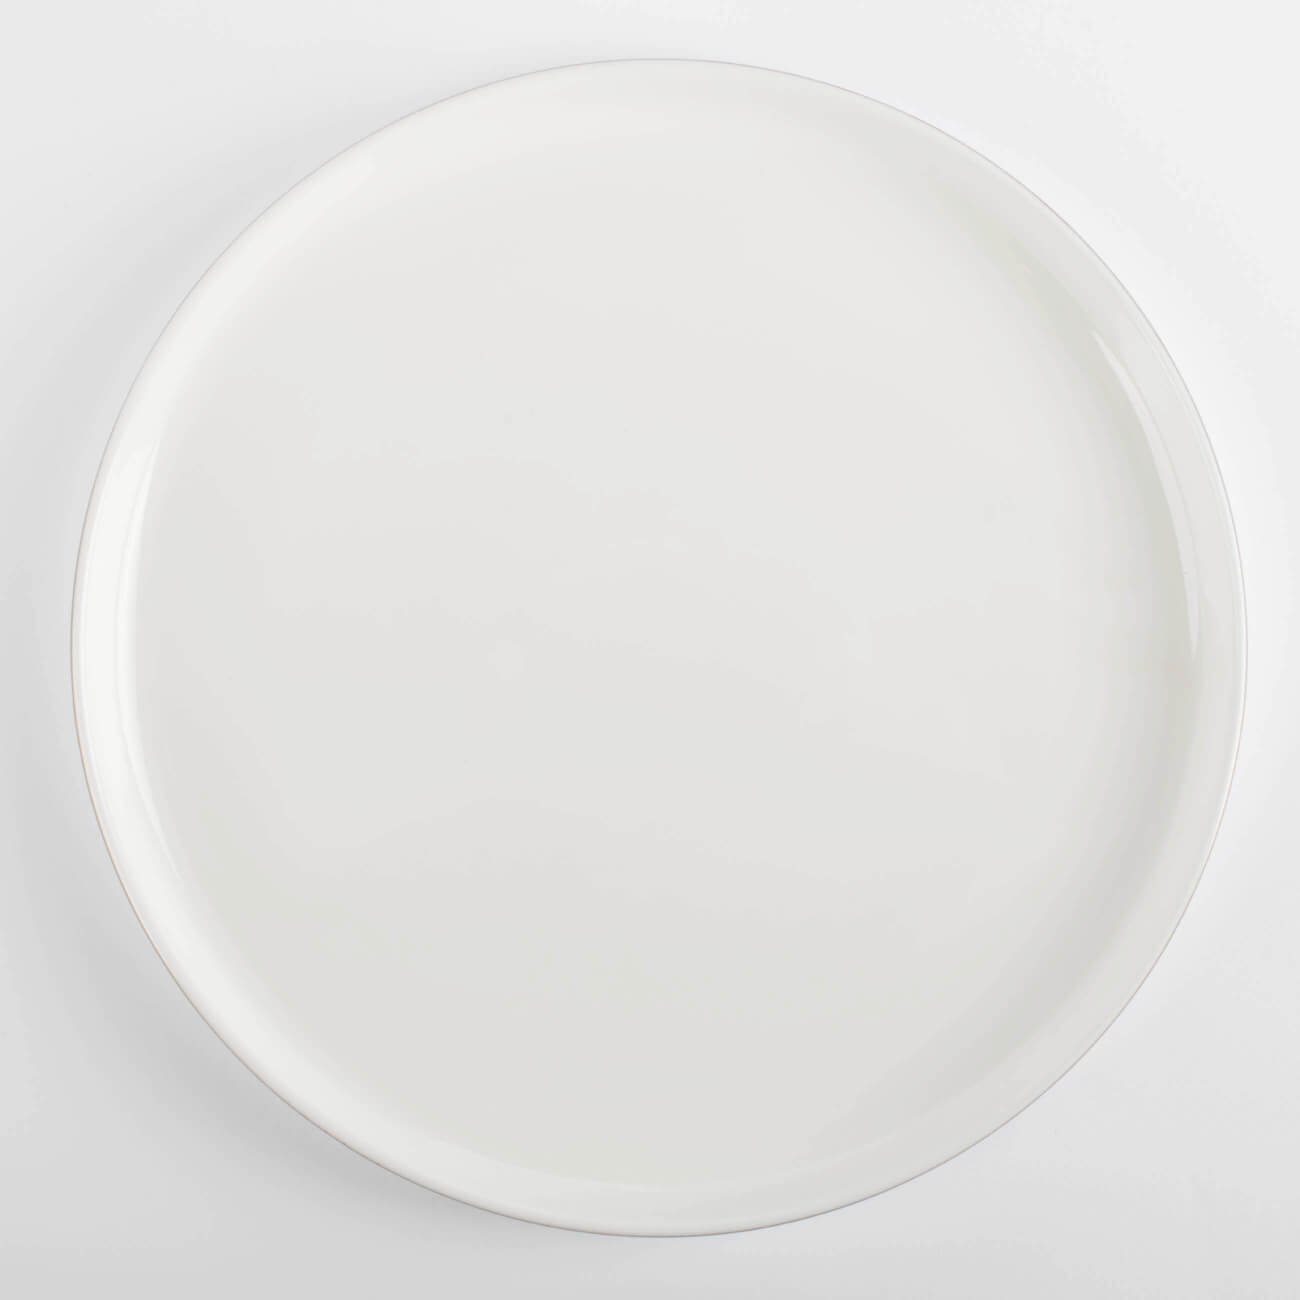 Тарелка обеденная, 26 см, фарфор F, белая, Ideal gold тарелка обеденная wedgwood wgw 40003894 гибискус 27 см